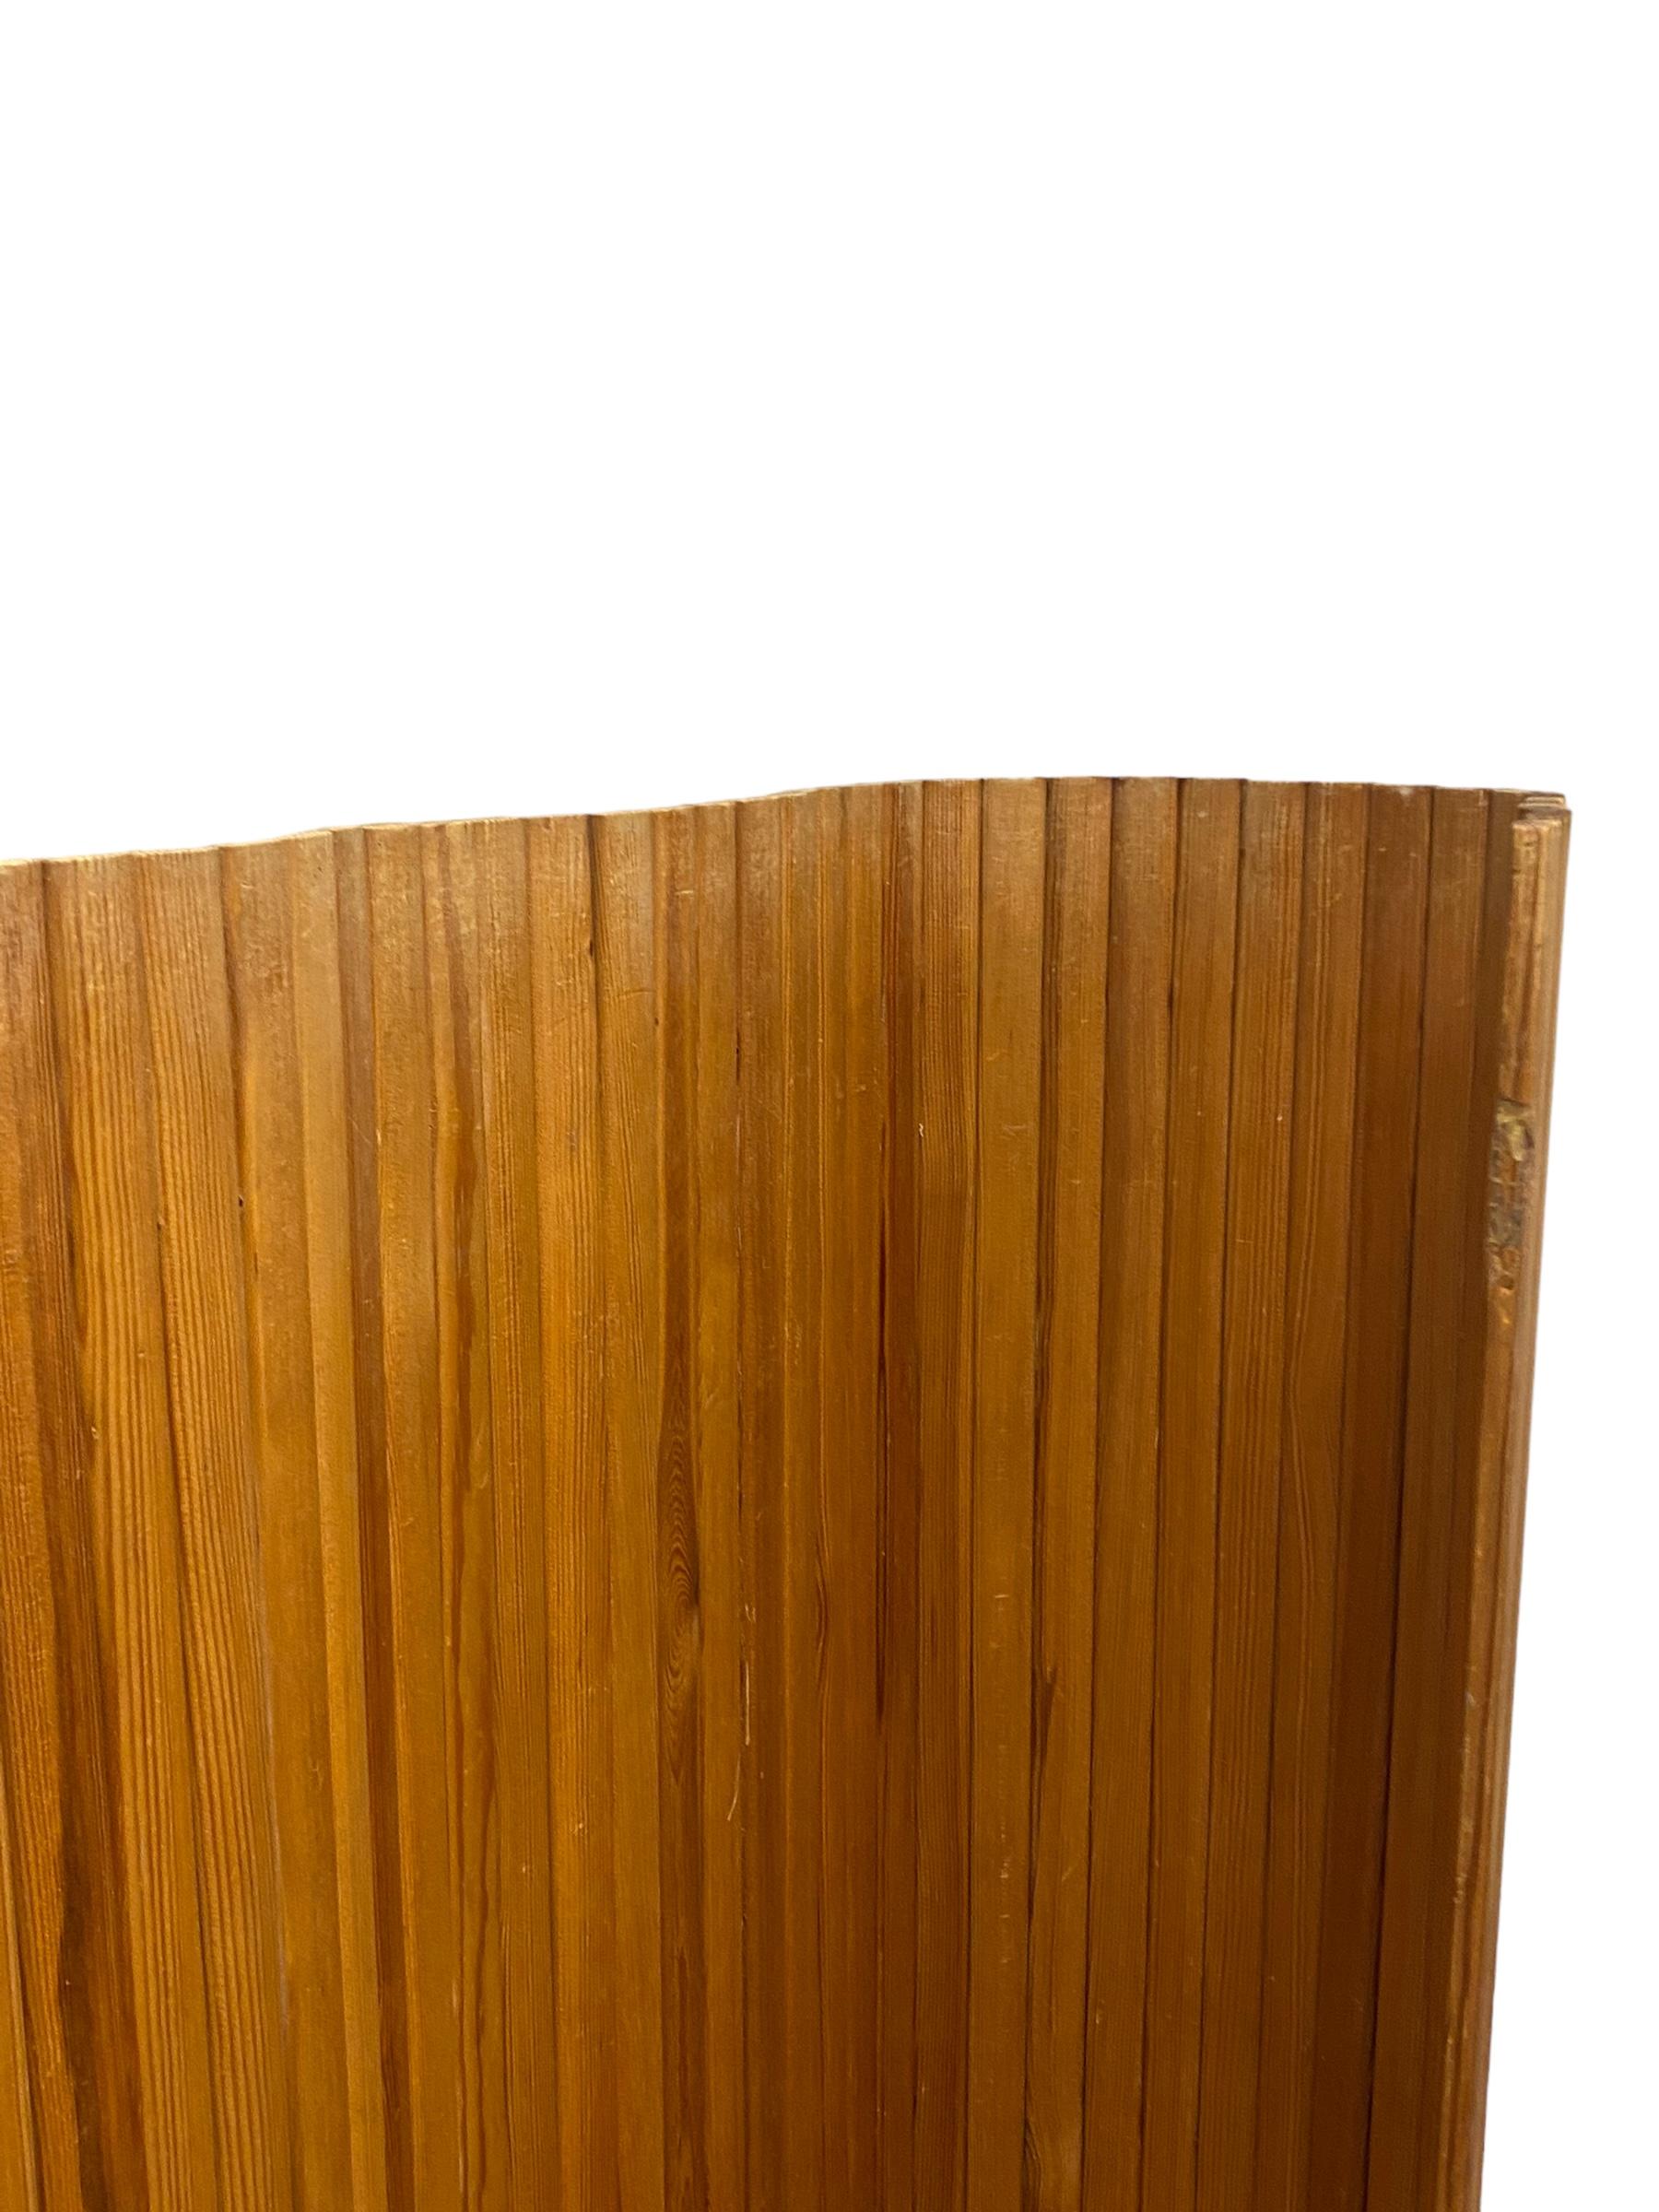 Pine Alvar Aalto, Wooden Room Divider, Late 1960s, Artek